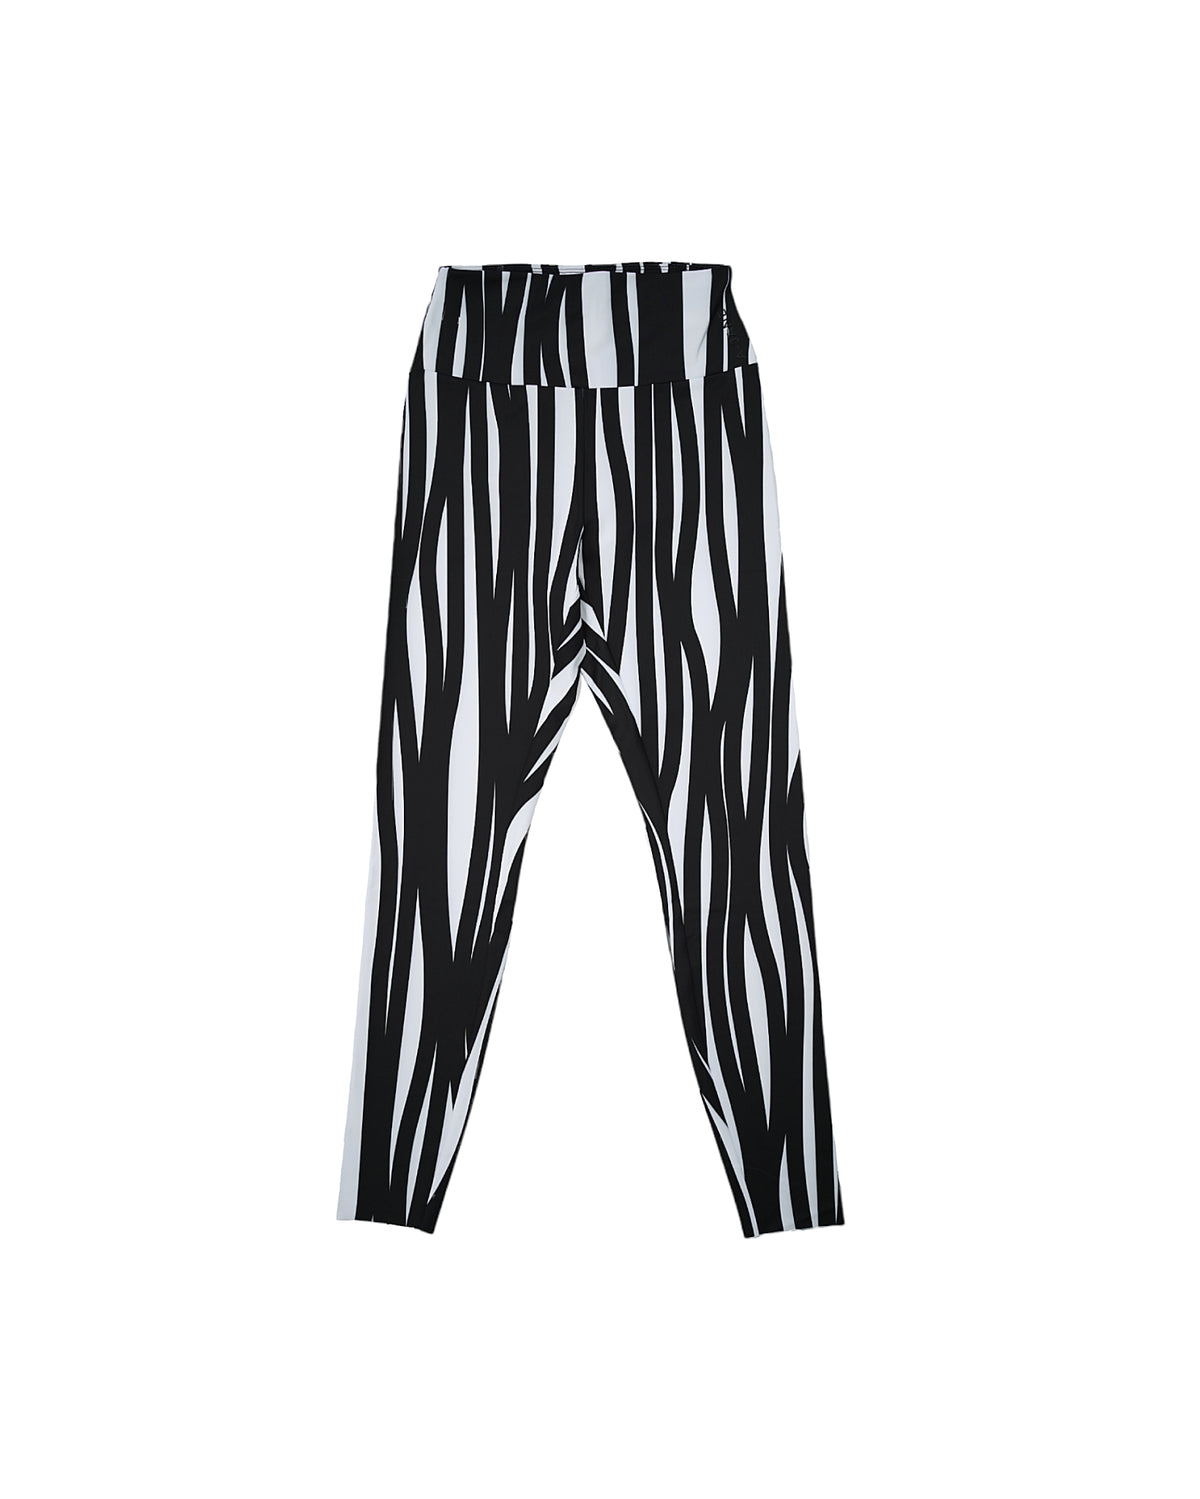 A-JANE Zenth High-Waisted Sinuarix Print Yoga Pants